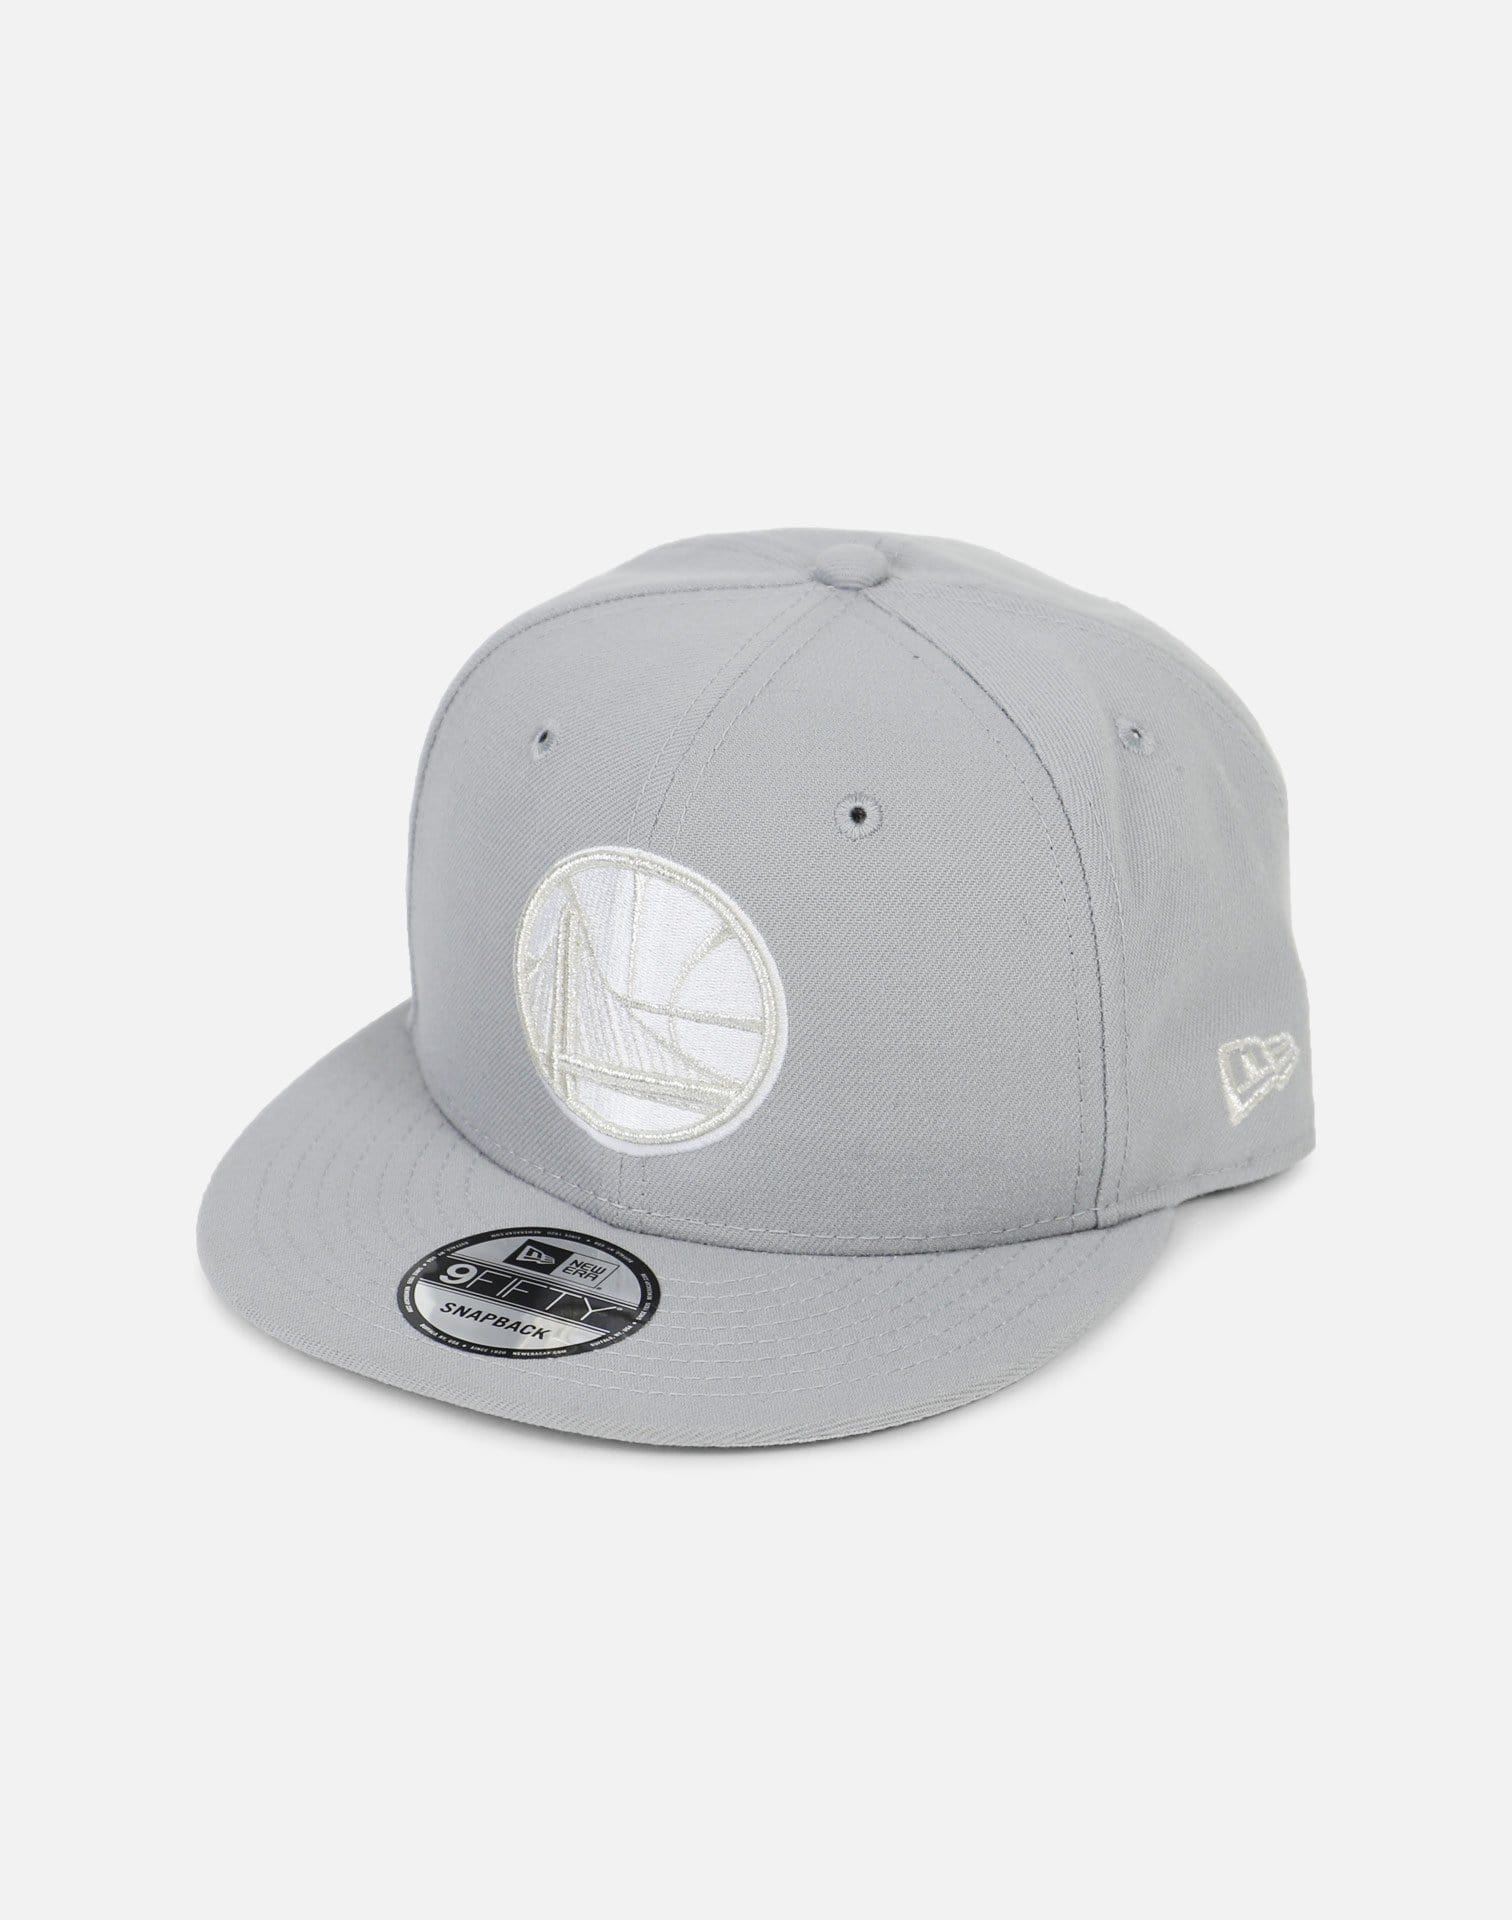 New Era Golden State Warriors 'Pure Money' Snapback Hat